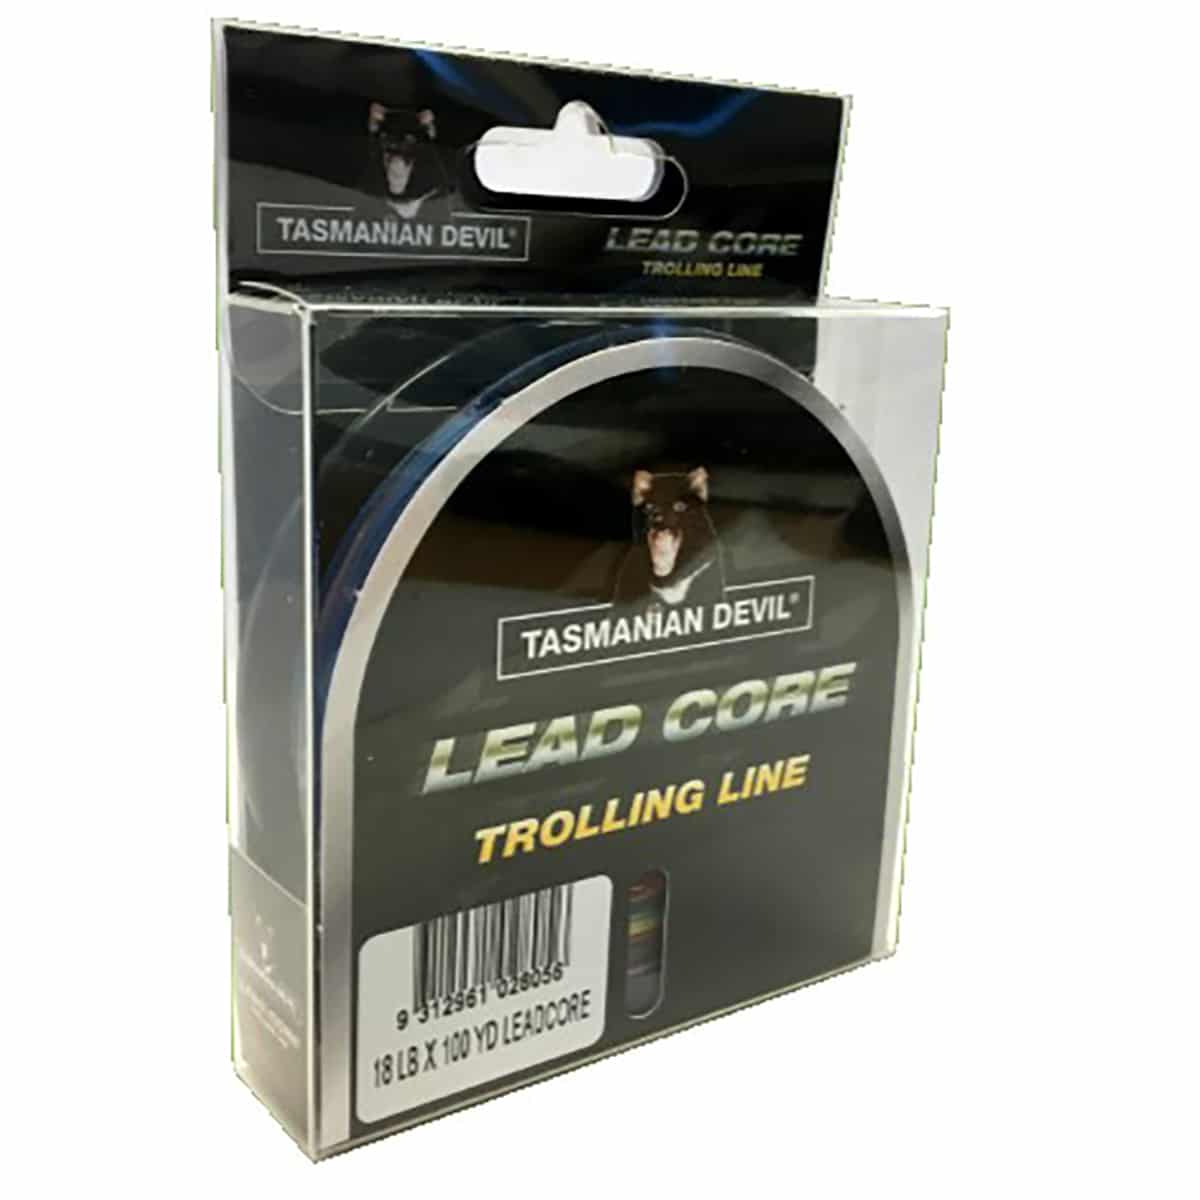 Tasmanian Devil Leadcore 14lbs 100yd Trolling Line -  - Mansfield Hunting & Fishing - Products to prepare for Corona Virus